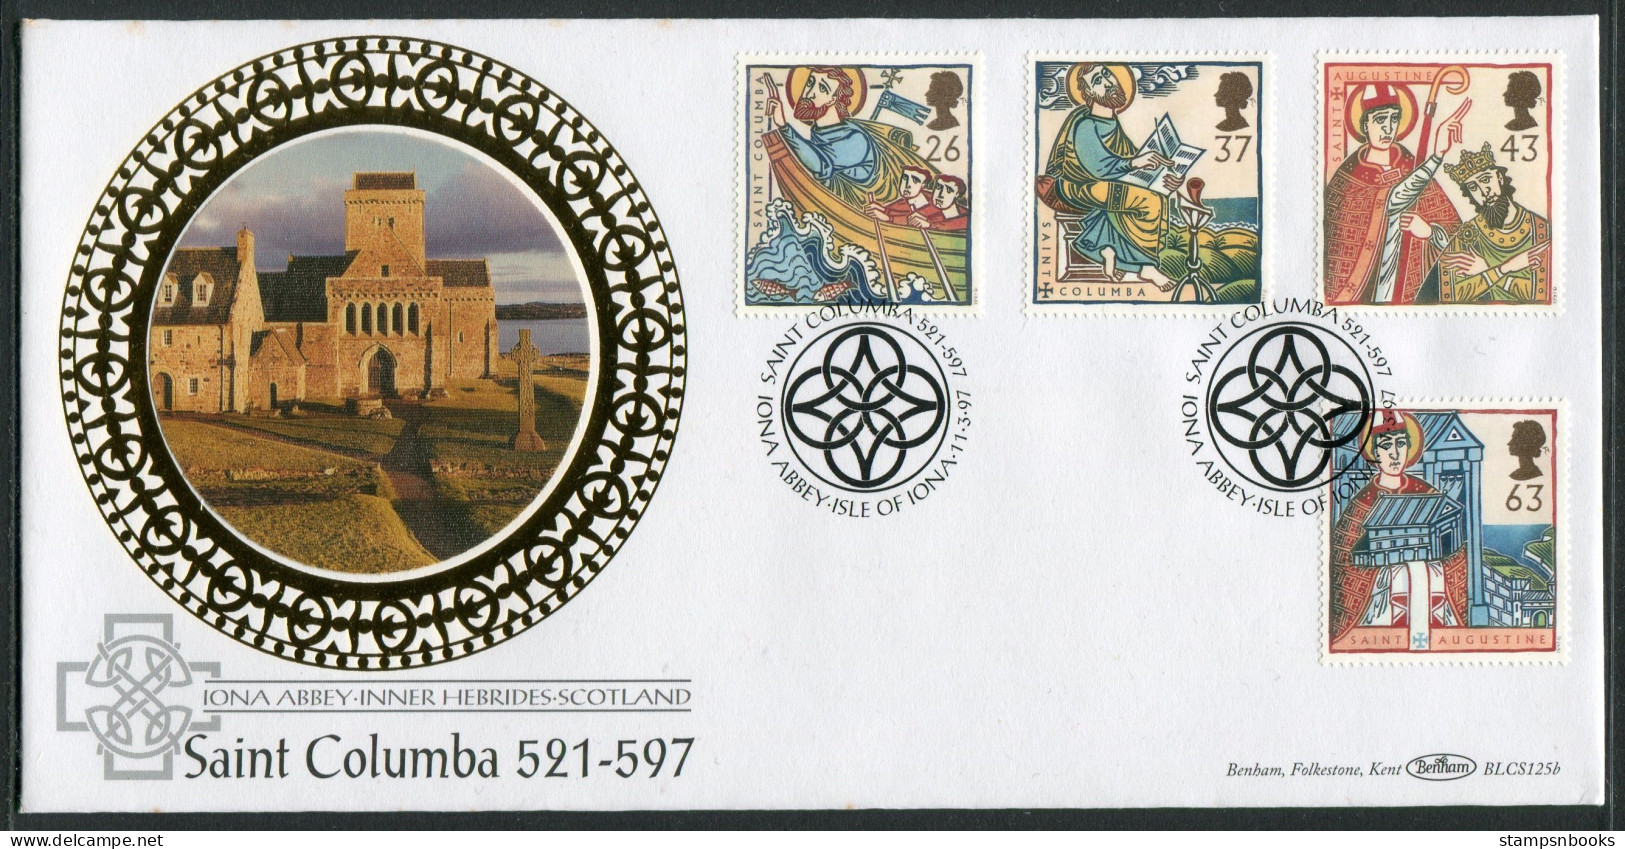 1997 GB Missions Of Faith First Day Cover, Saint Columba, Iona Abbey, Scotland Benham BLCS 125b FDC - 1991-2000 Dezimalausgaben